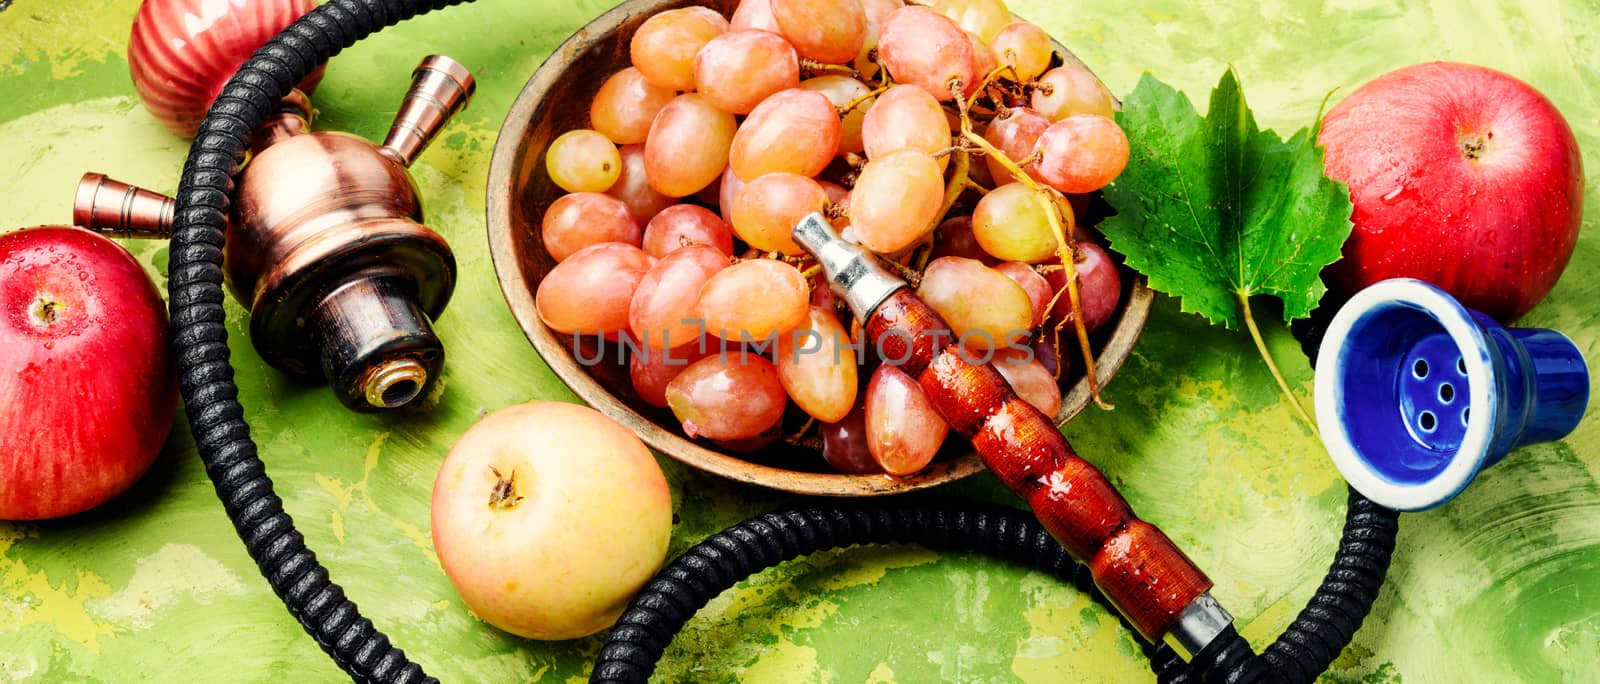 Oriental shisha hookah with aroma grapes for relax.Grapes shisha